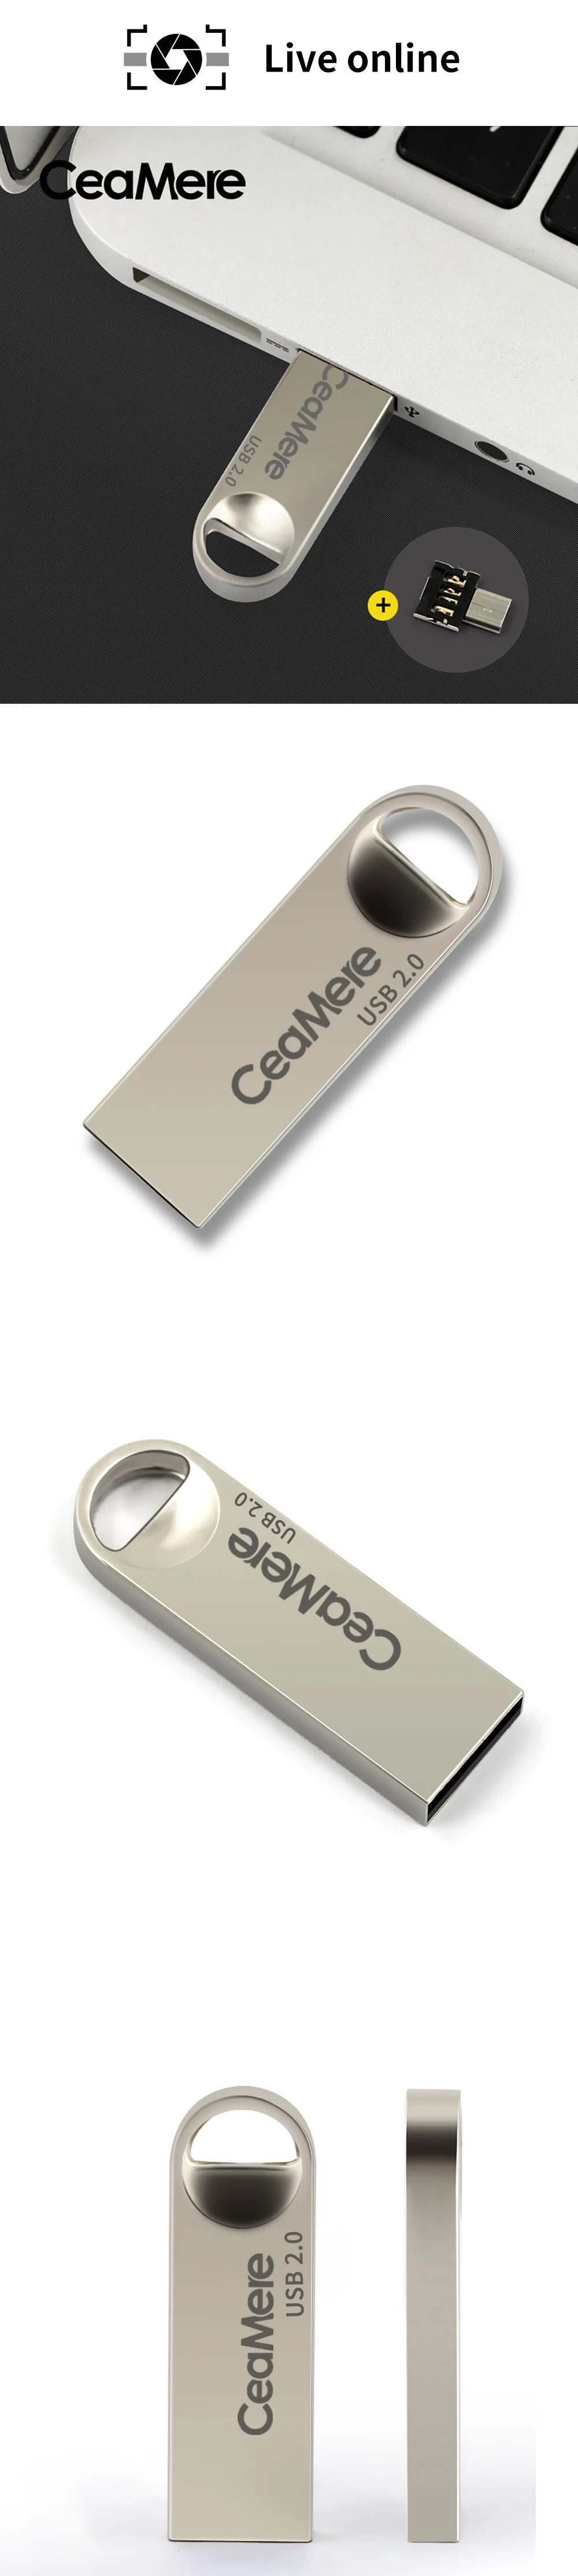 Ceamere C1 USB флеш-накопитель 8 ГБ/16 ГБ/32 ГБ/64 ГБ флеш-накопитель Флешка флеш-диск USB 2,0 карта памяти USB диск 512 МБ 256 Мб